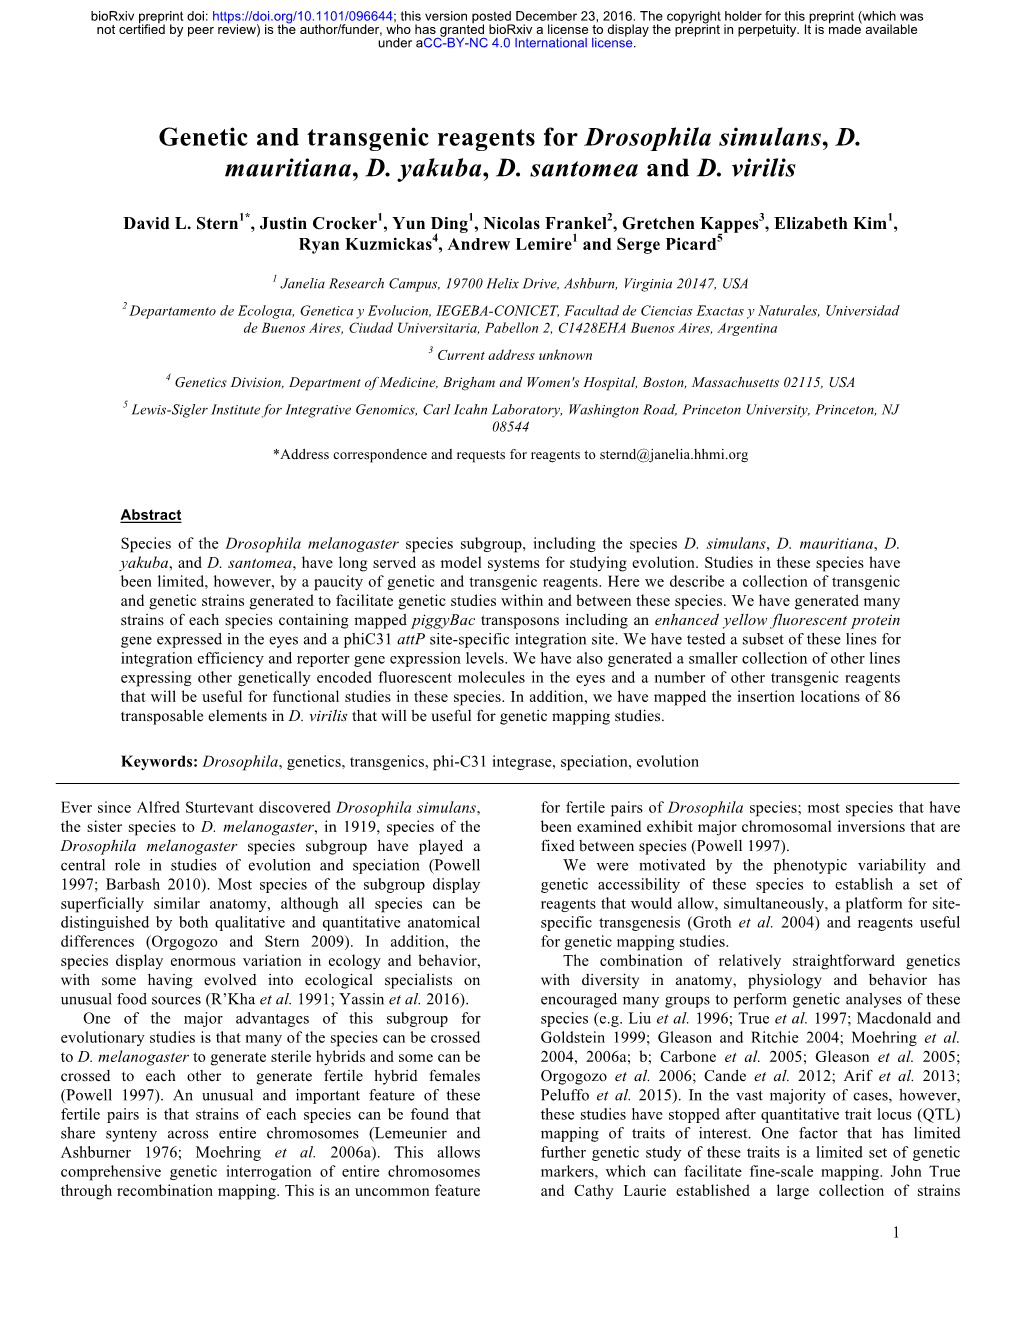 Genetic and Transgenic Reagents for Drosophila Simulans, D. Mauritiana, D